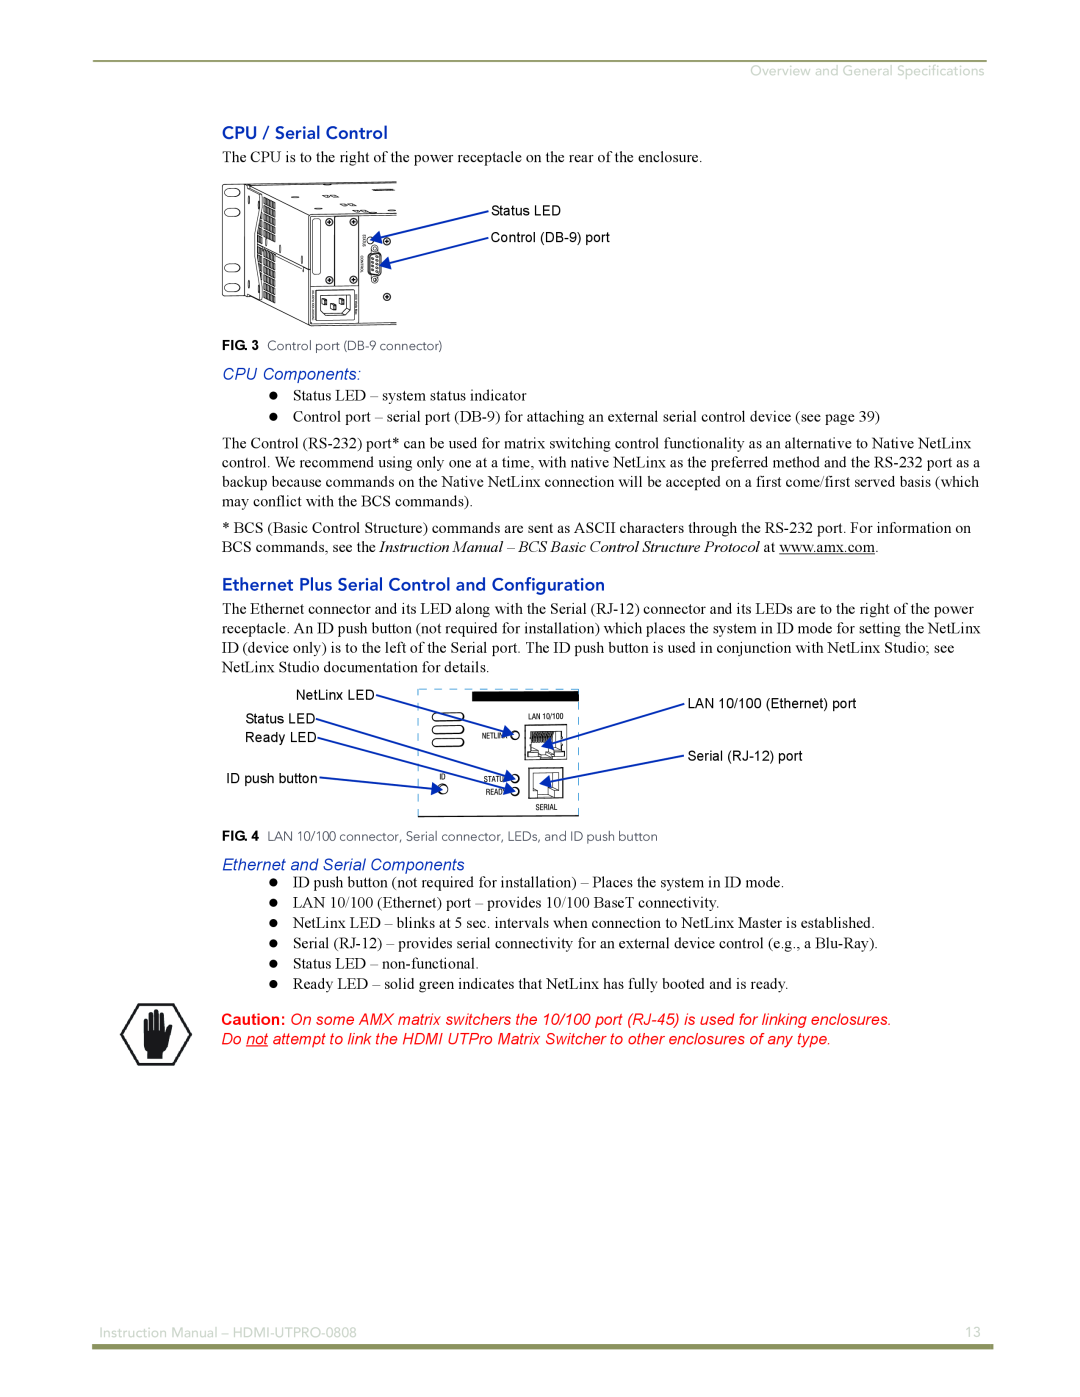 AMX HDMI-UTPRO-0808 instruction manual CPU / Serial Control, CPU Components, Ethernet Plus Serial Control and Configuration 